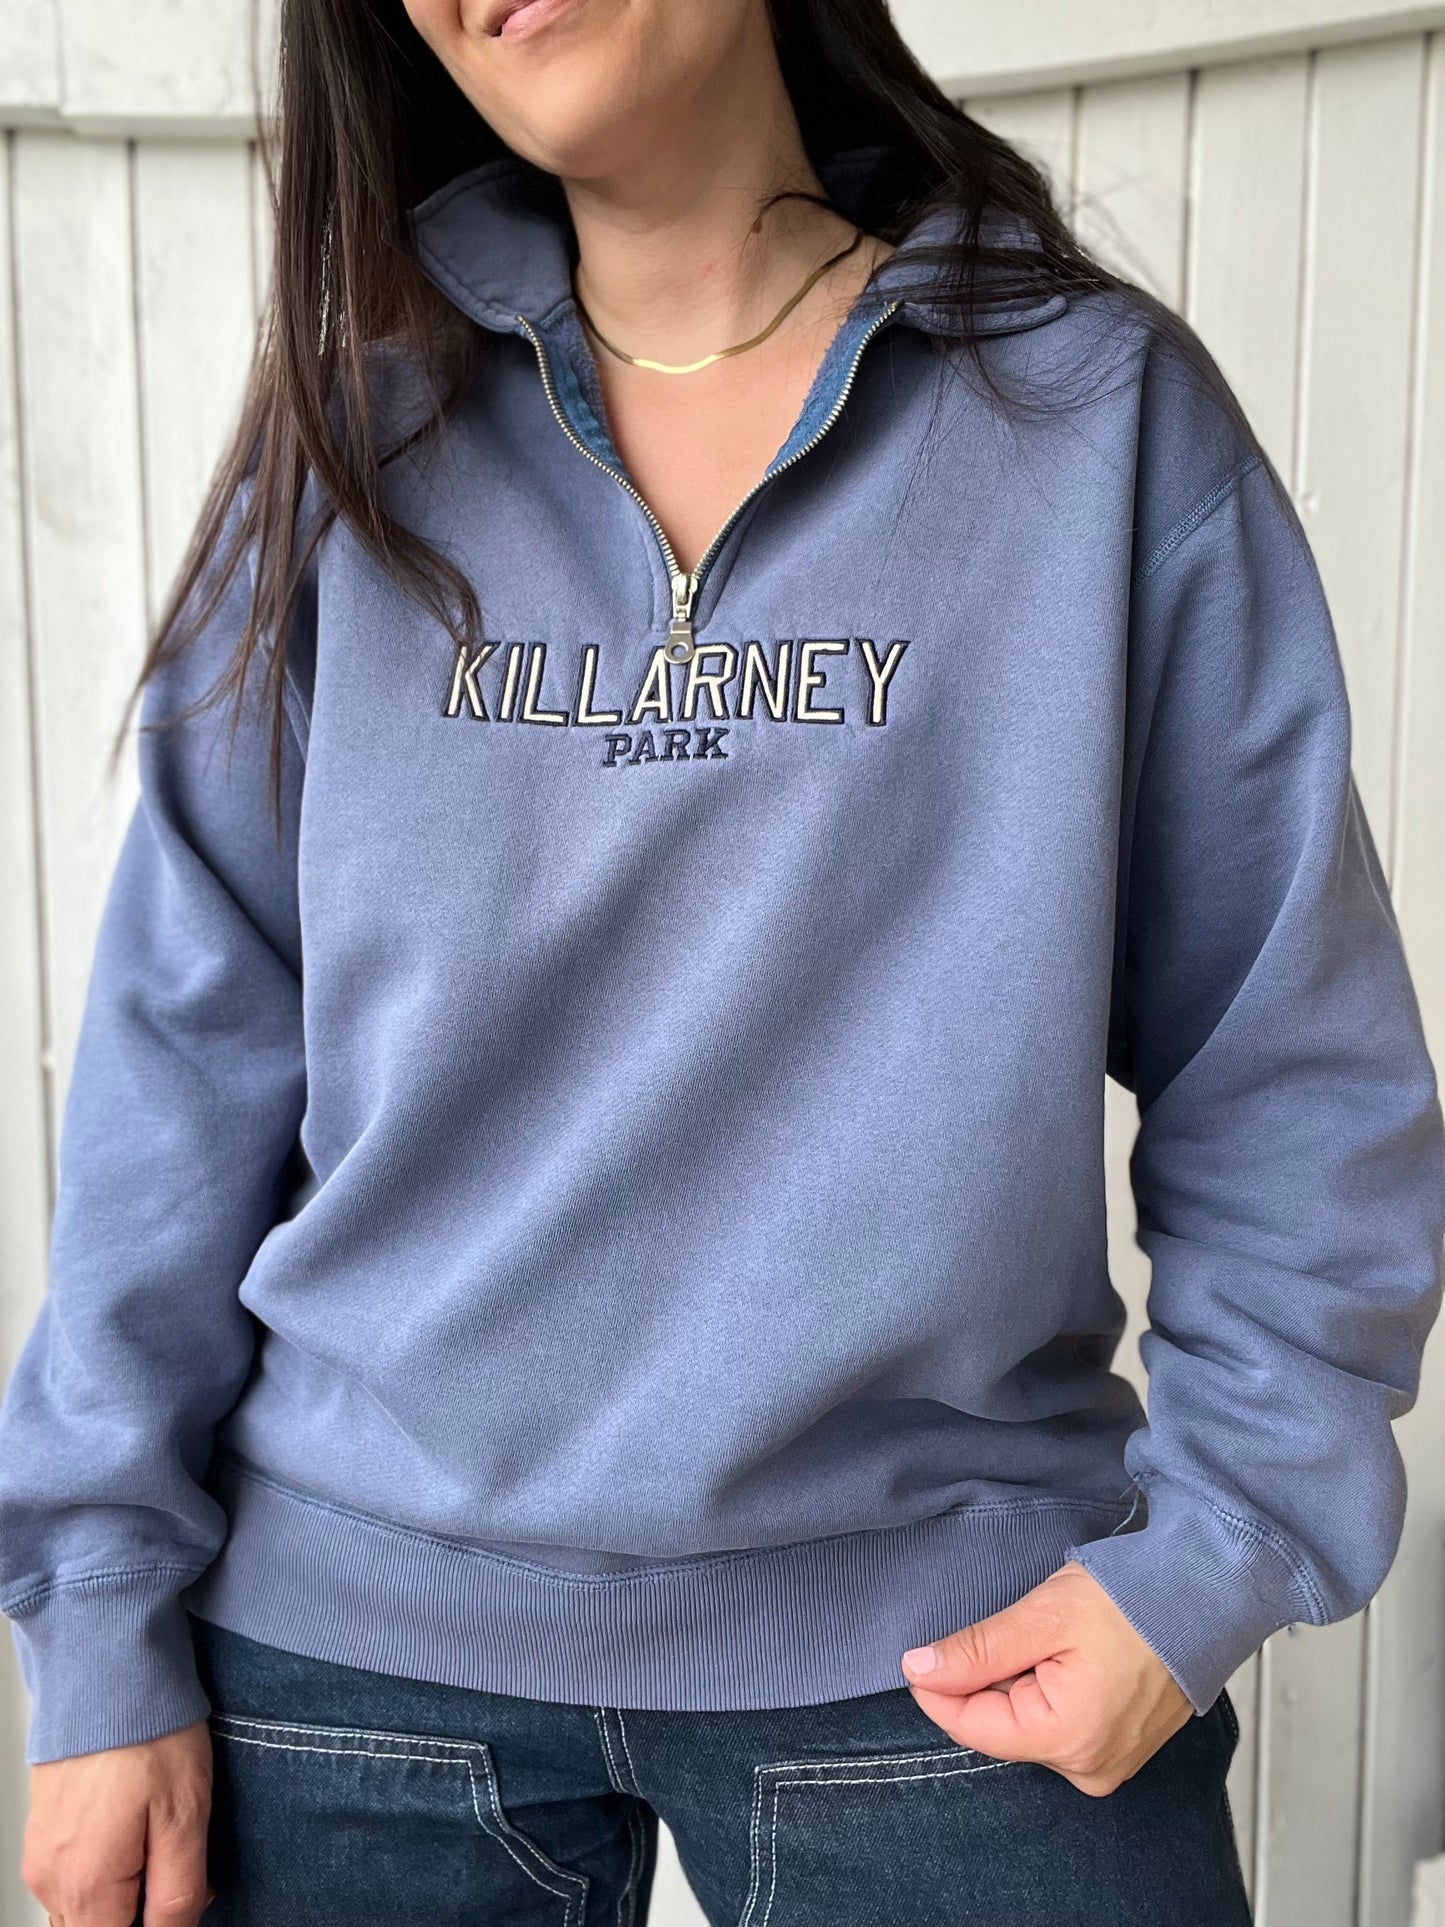 Killarney Park Pullover Sweater - Size XL